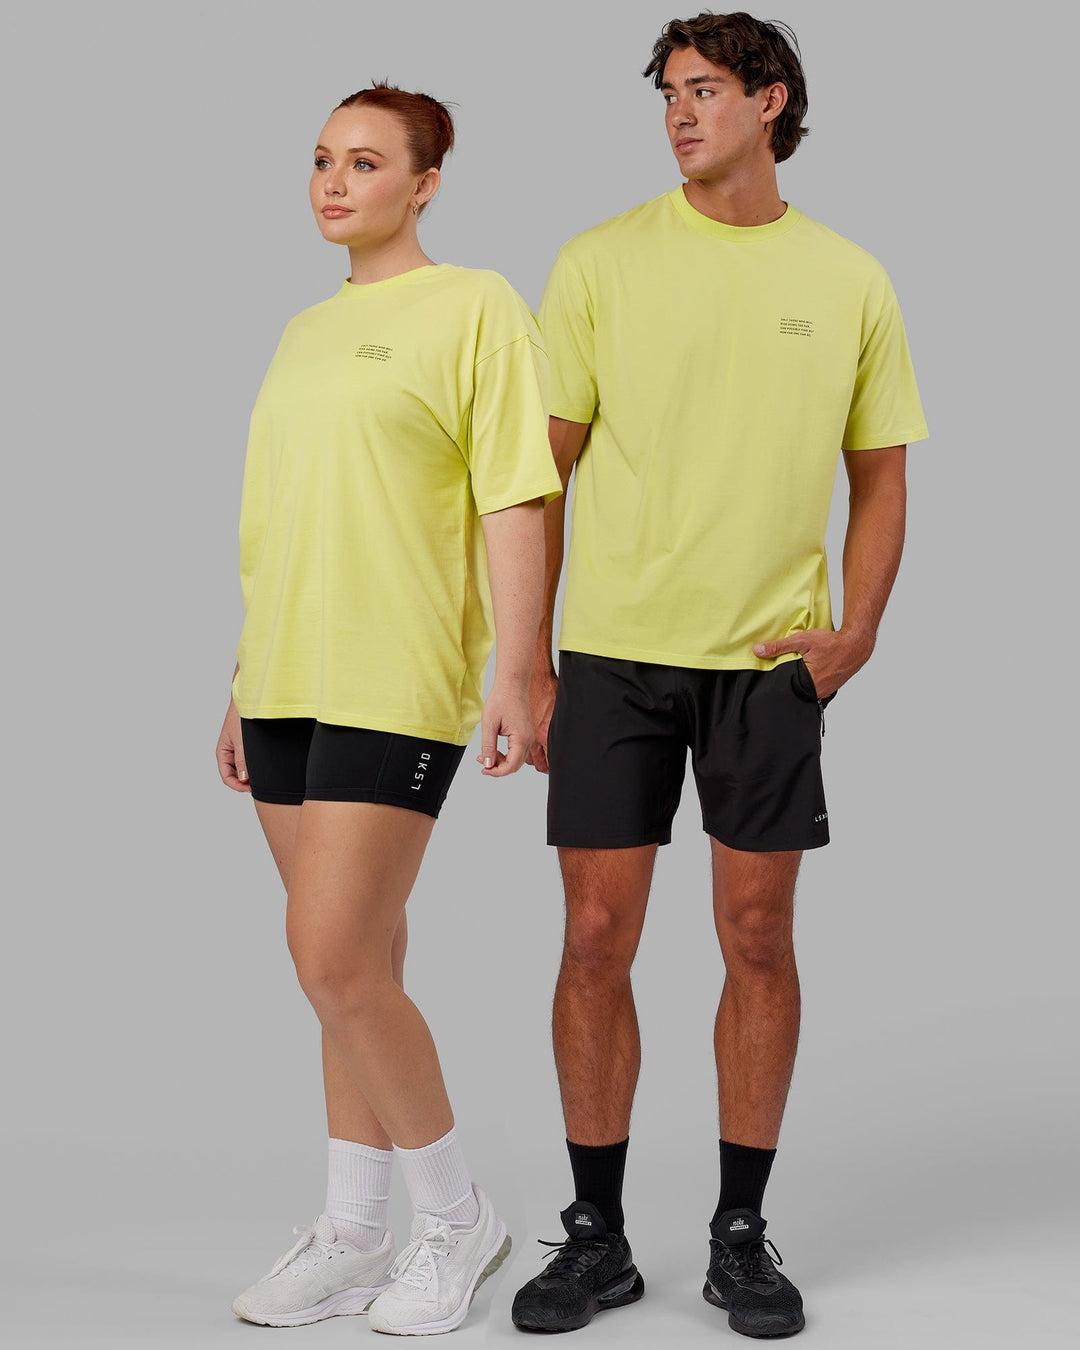 Duo wearing Unisex Strive FLXCotton Tee Oversize - Citrus Green